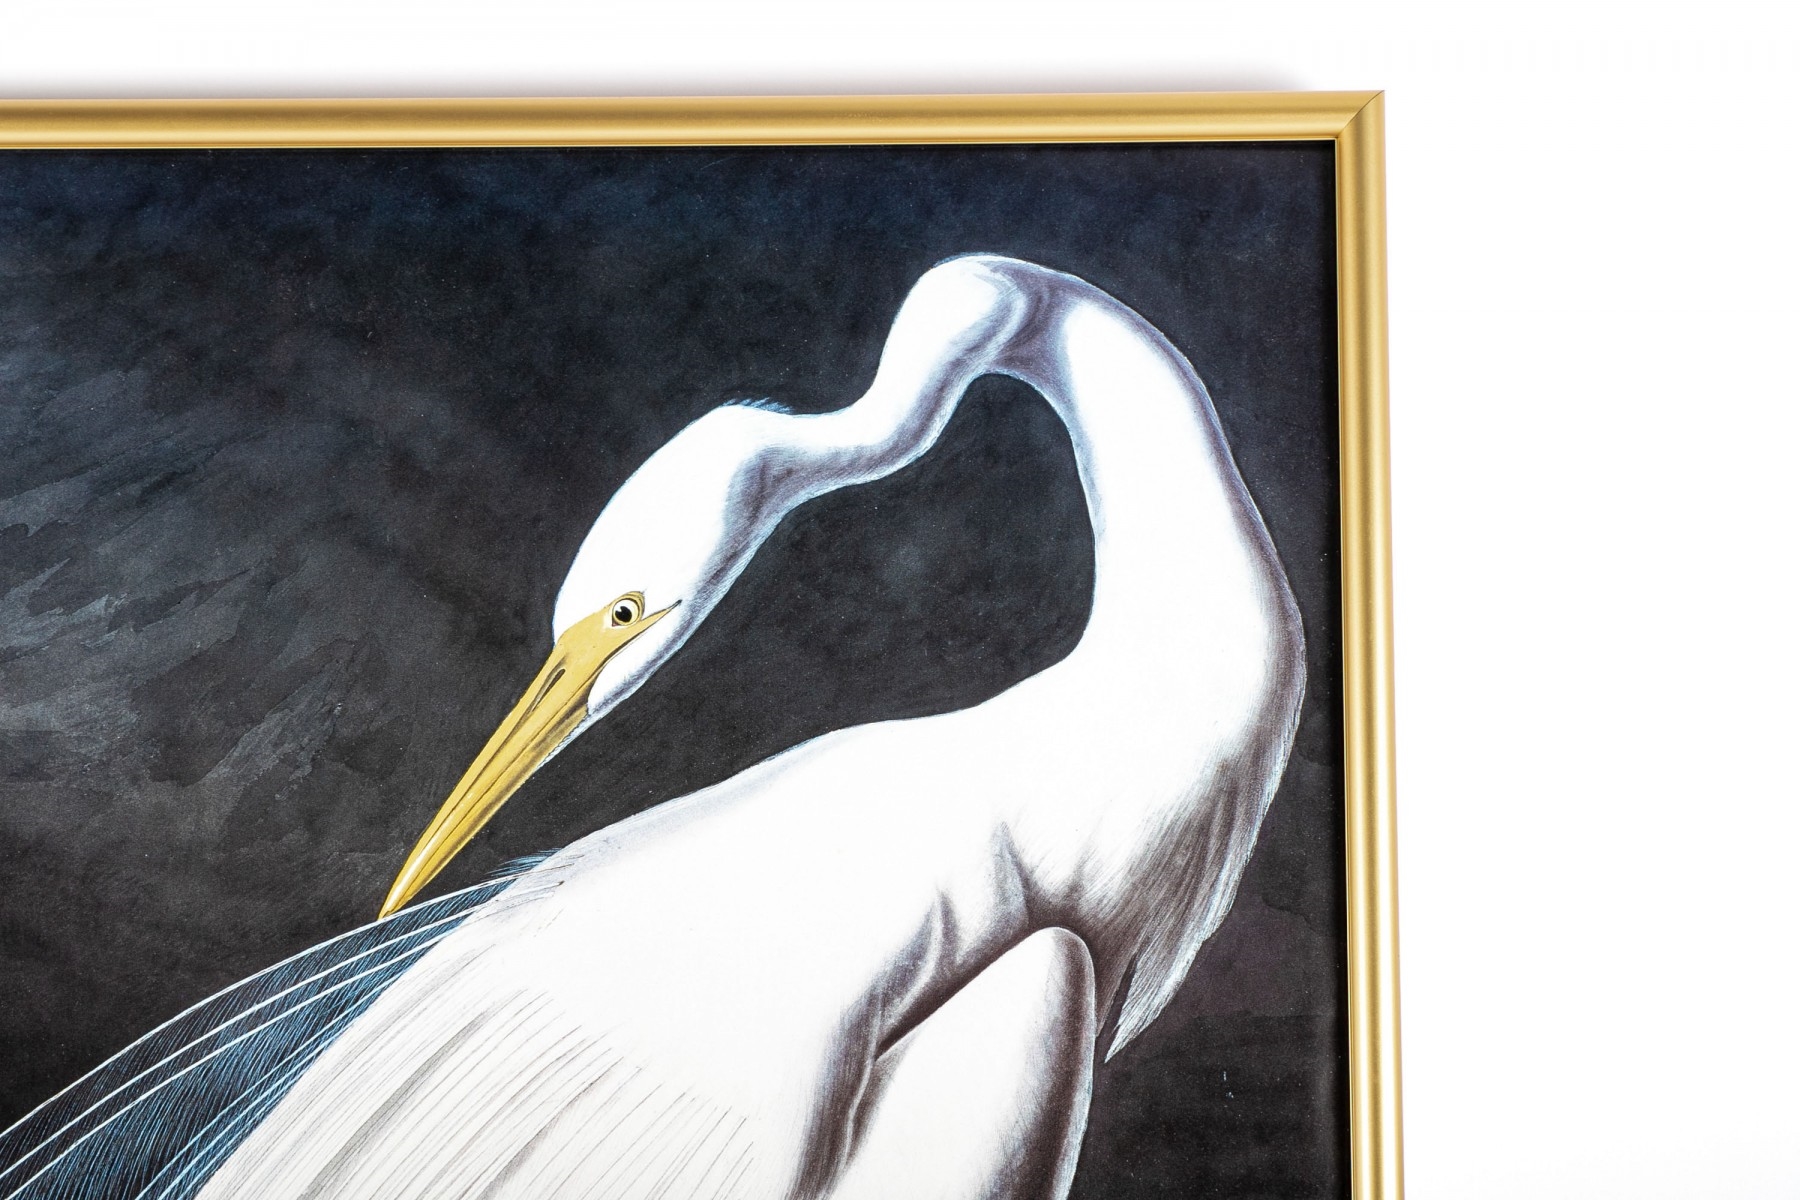 Artwork by John James Audubon, The Birds of America, Made of poster